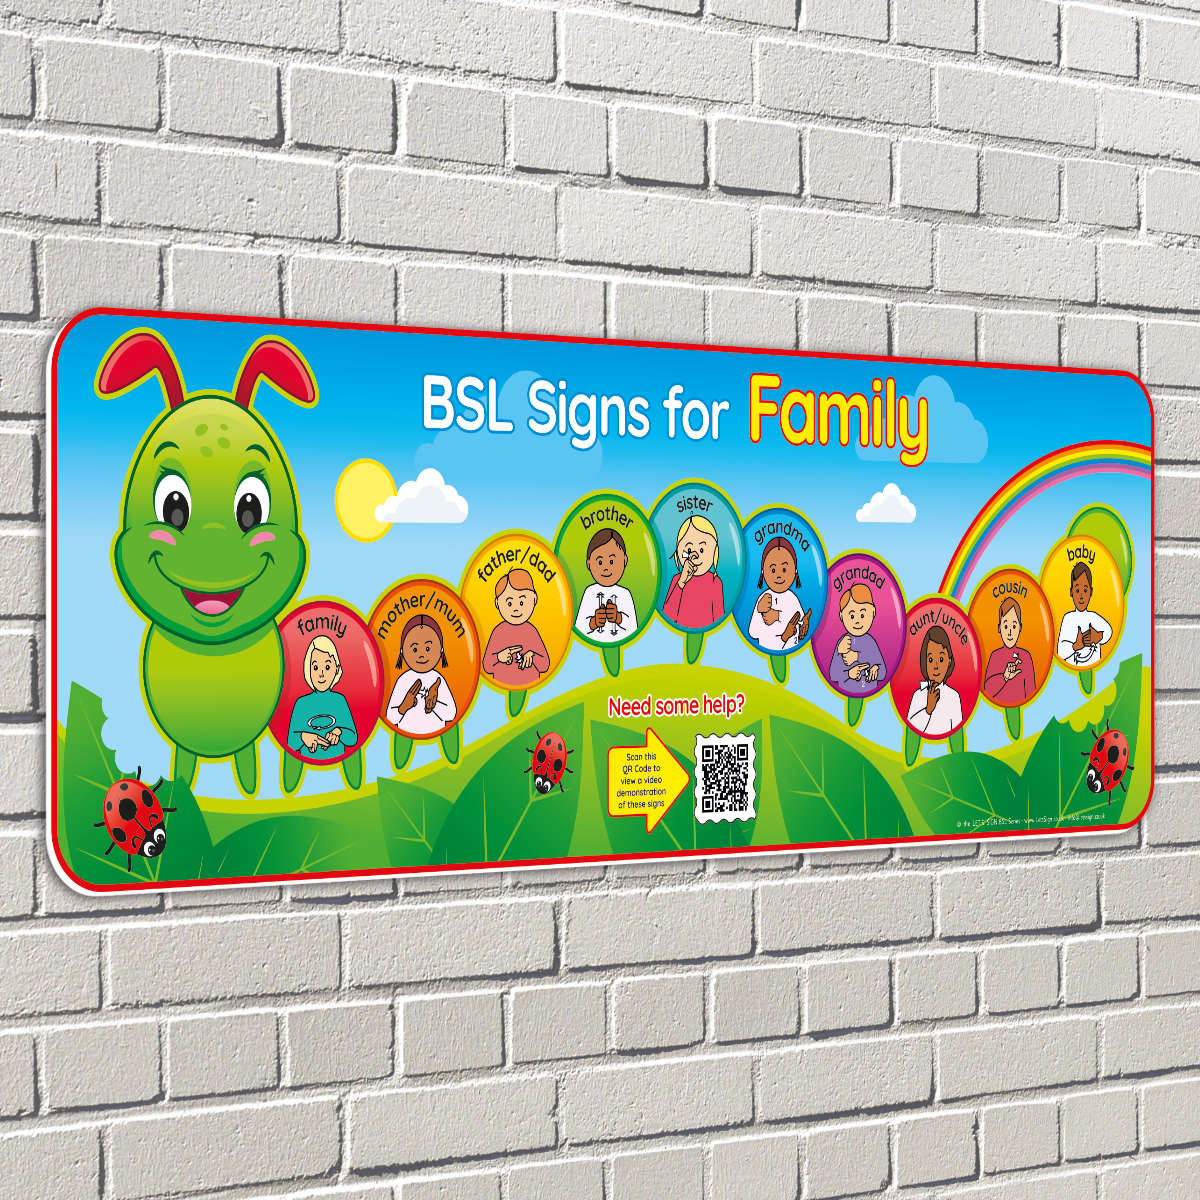 BSL Family Caterpillar British Sign Language Sign for Schools